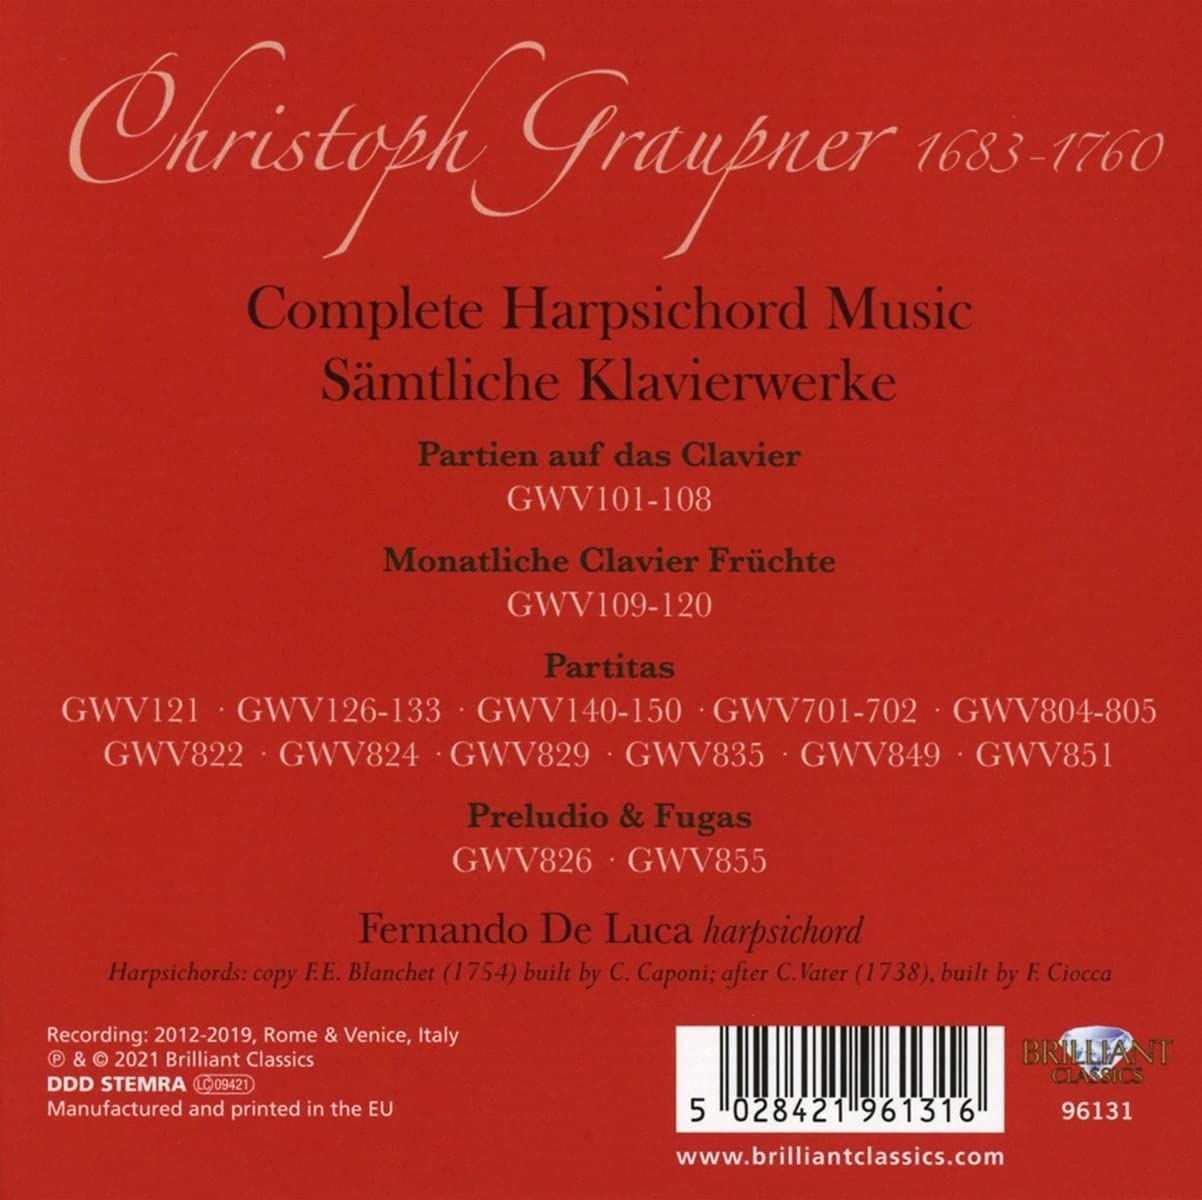 Fernando de Luca 크리스토프 그라우프너: 하프시코드 작품 전곡 (Christoph Graupner: Complete Harpsichord Music) 